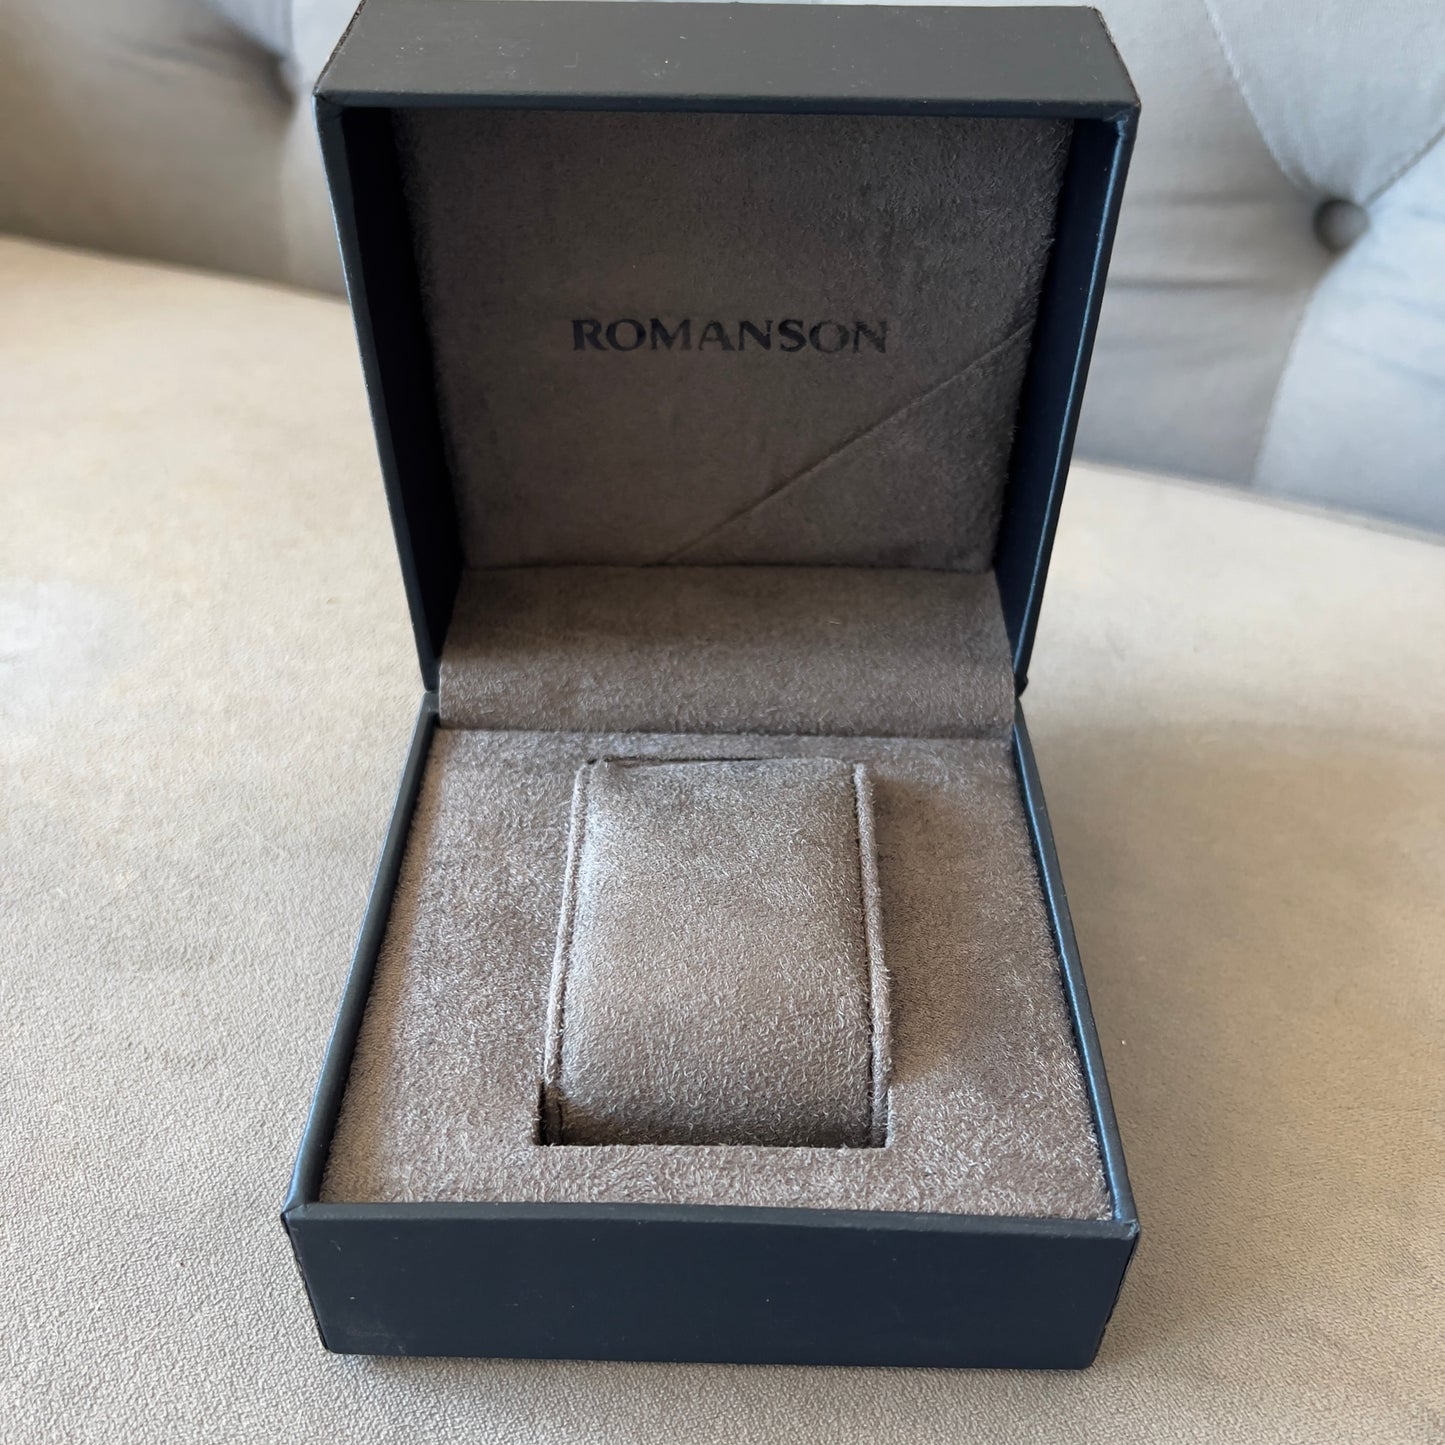 ROMANSON Box + Filled Certificate